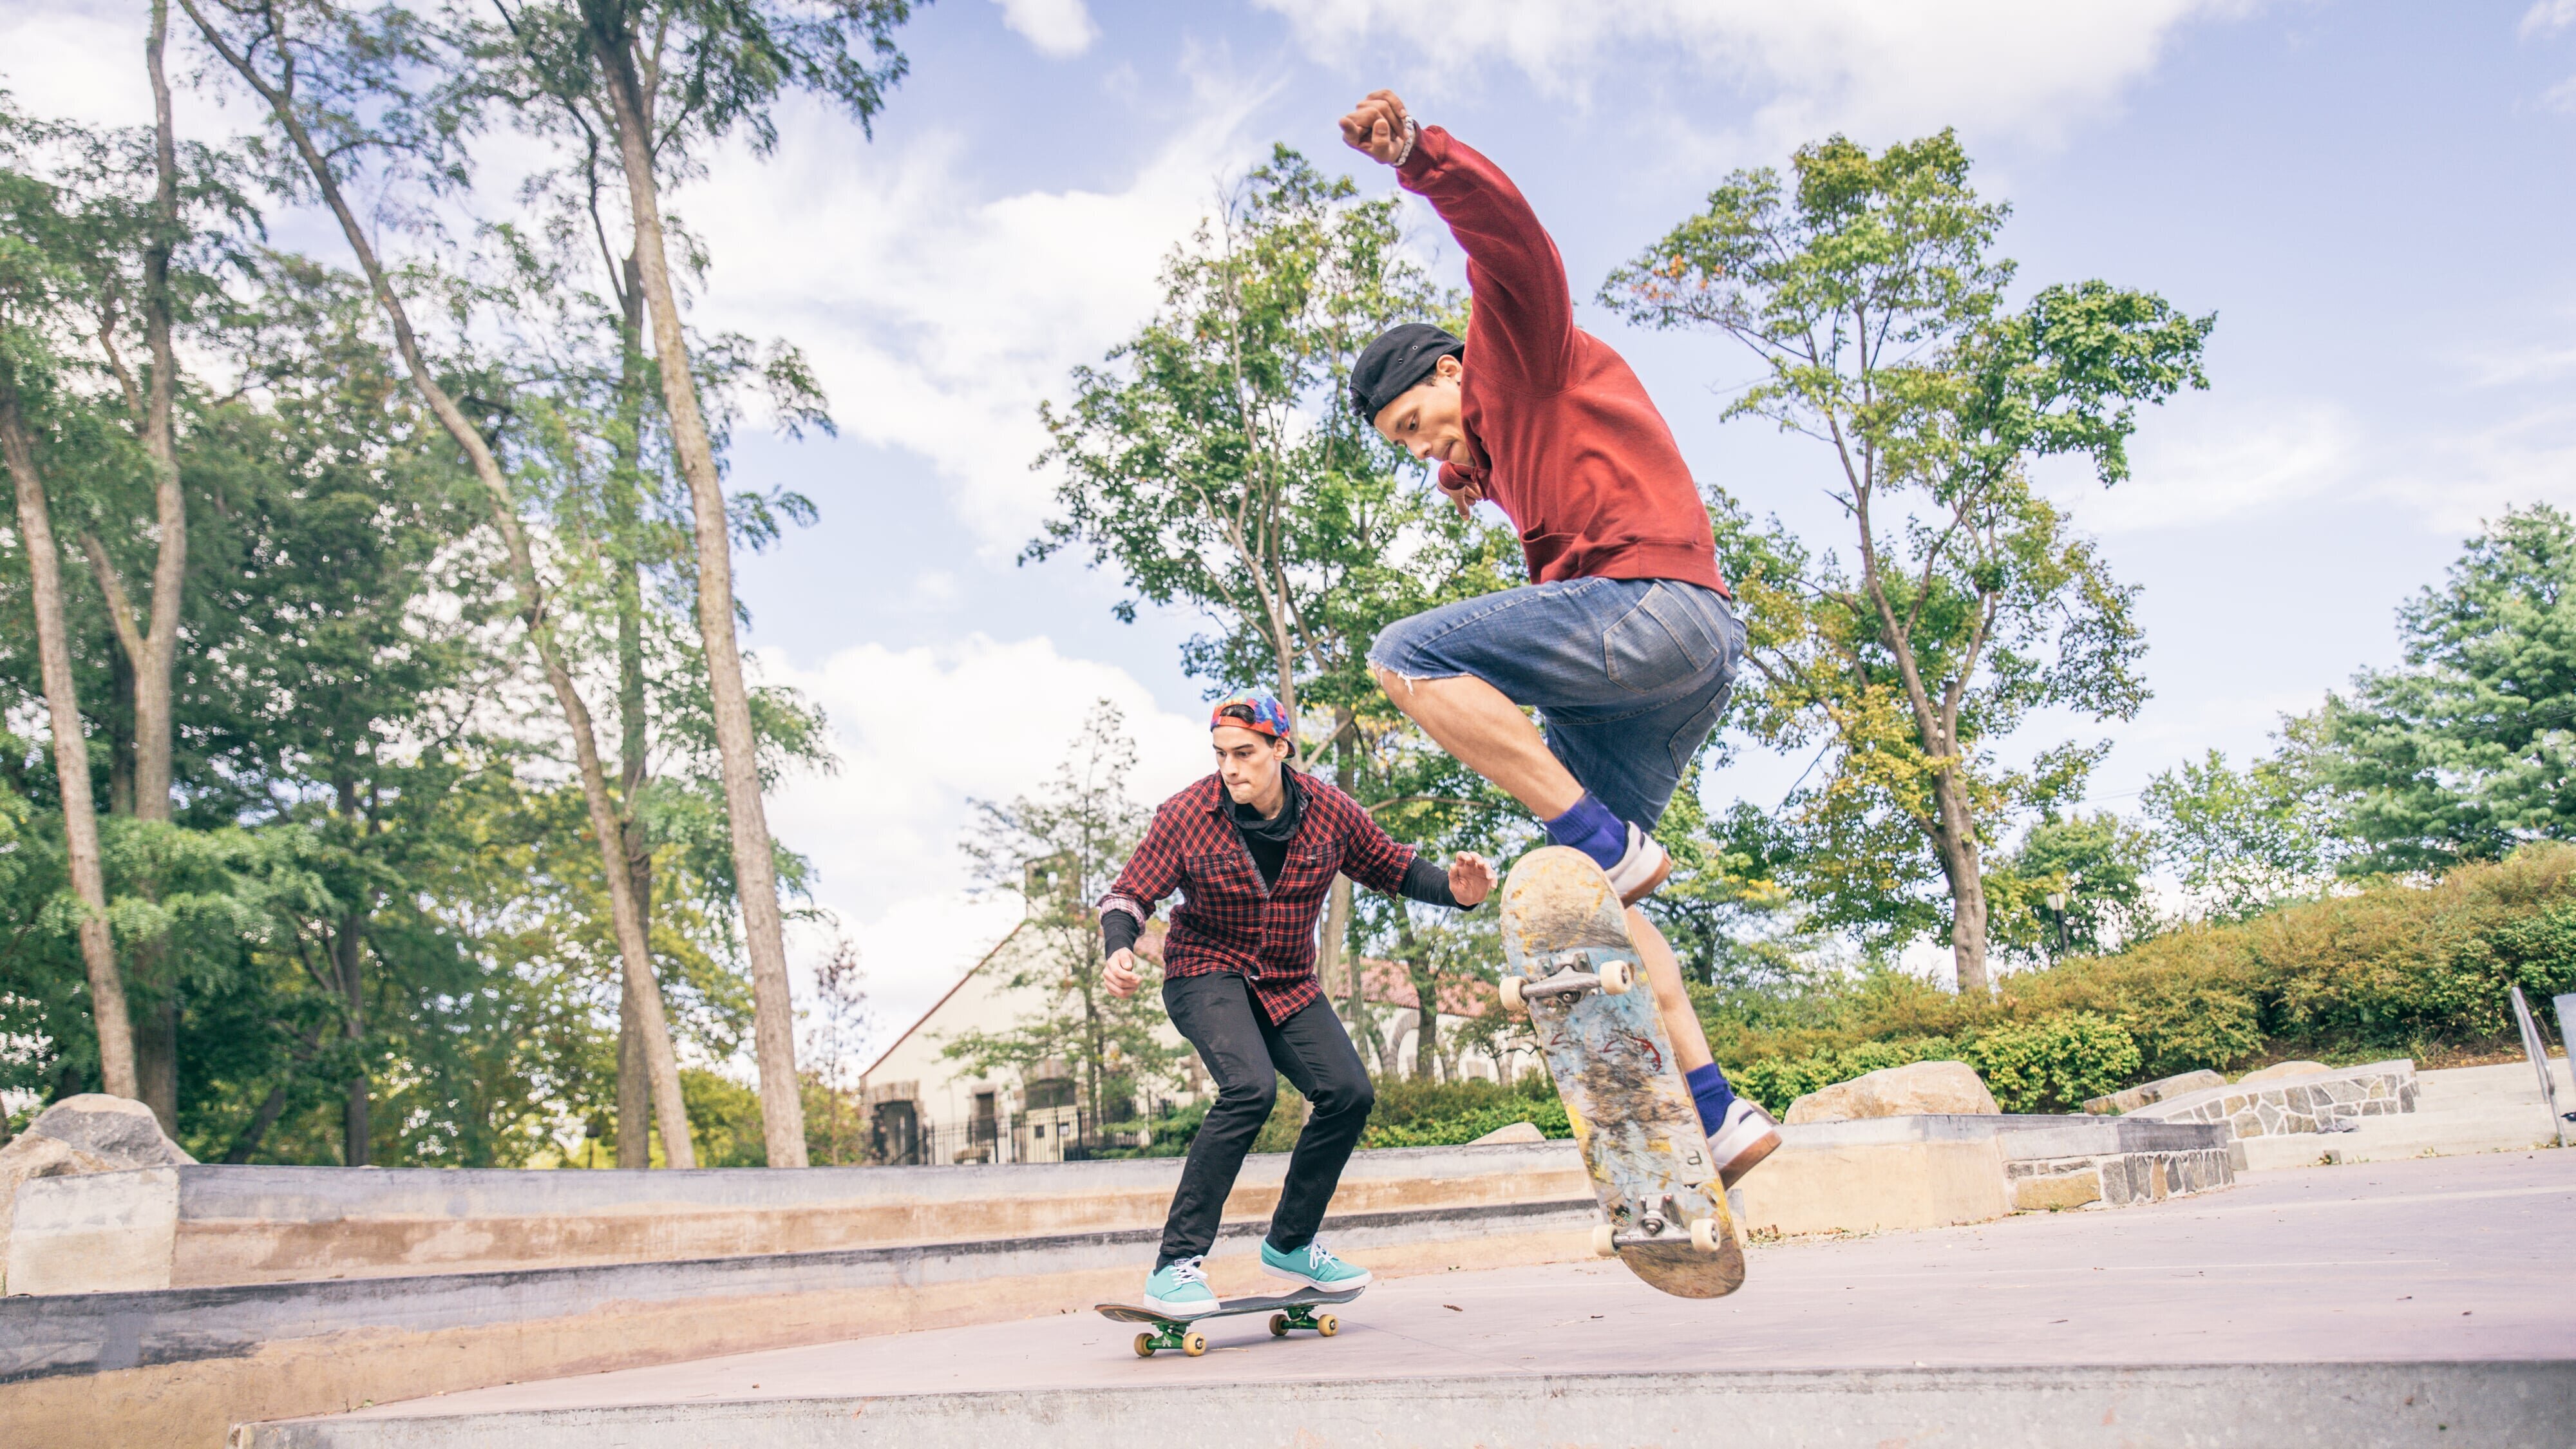 Skateboarding: Concrete Dreams